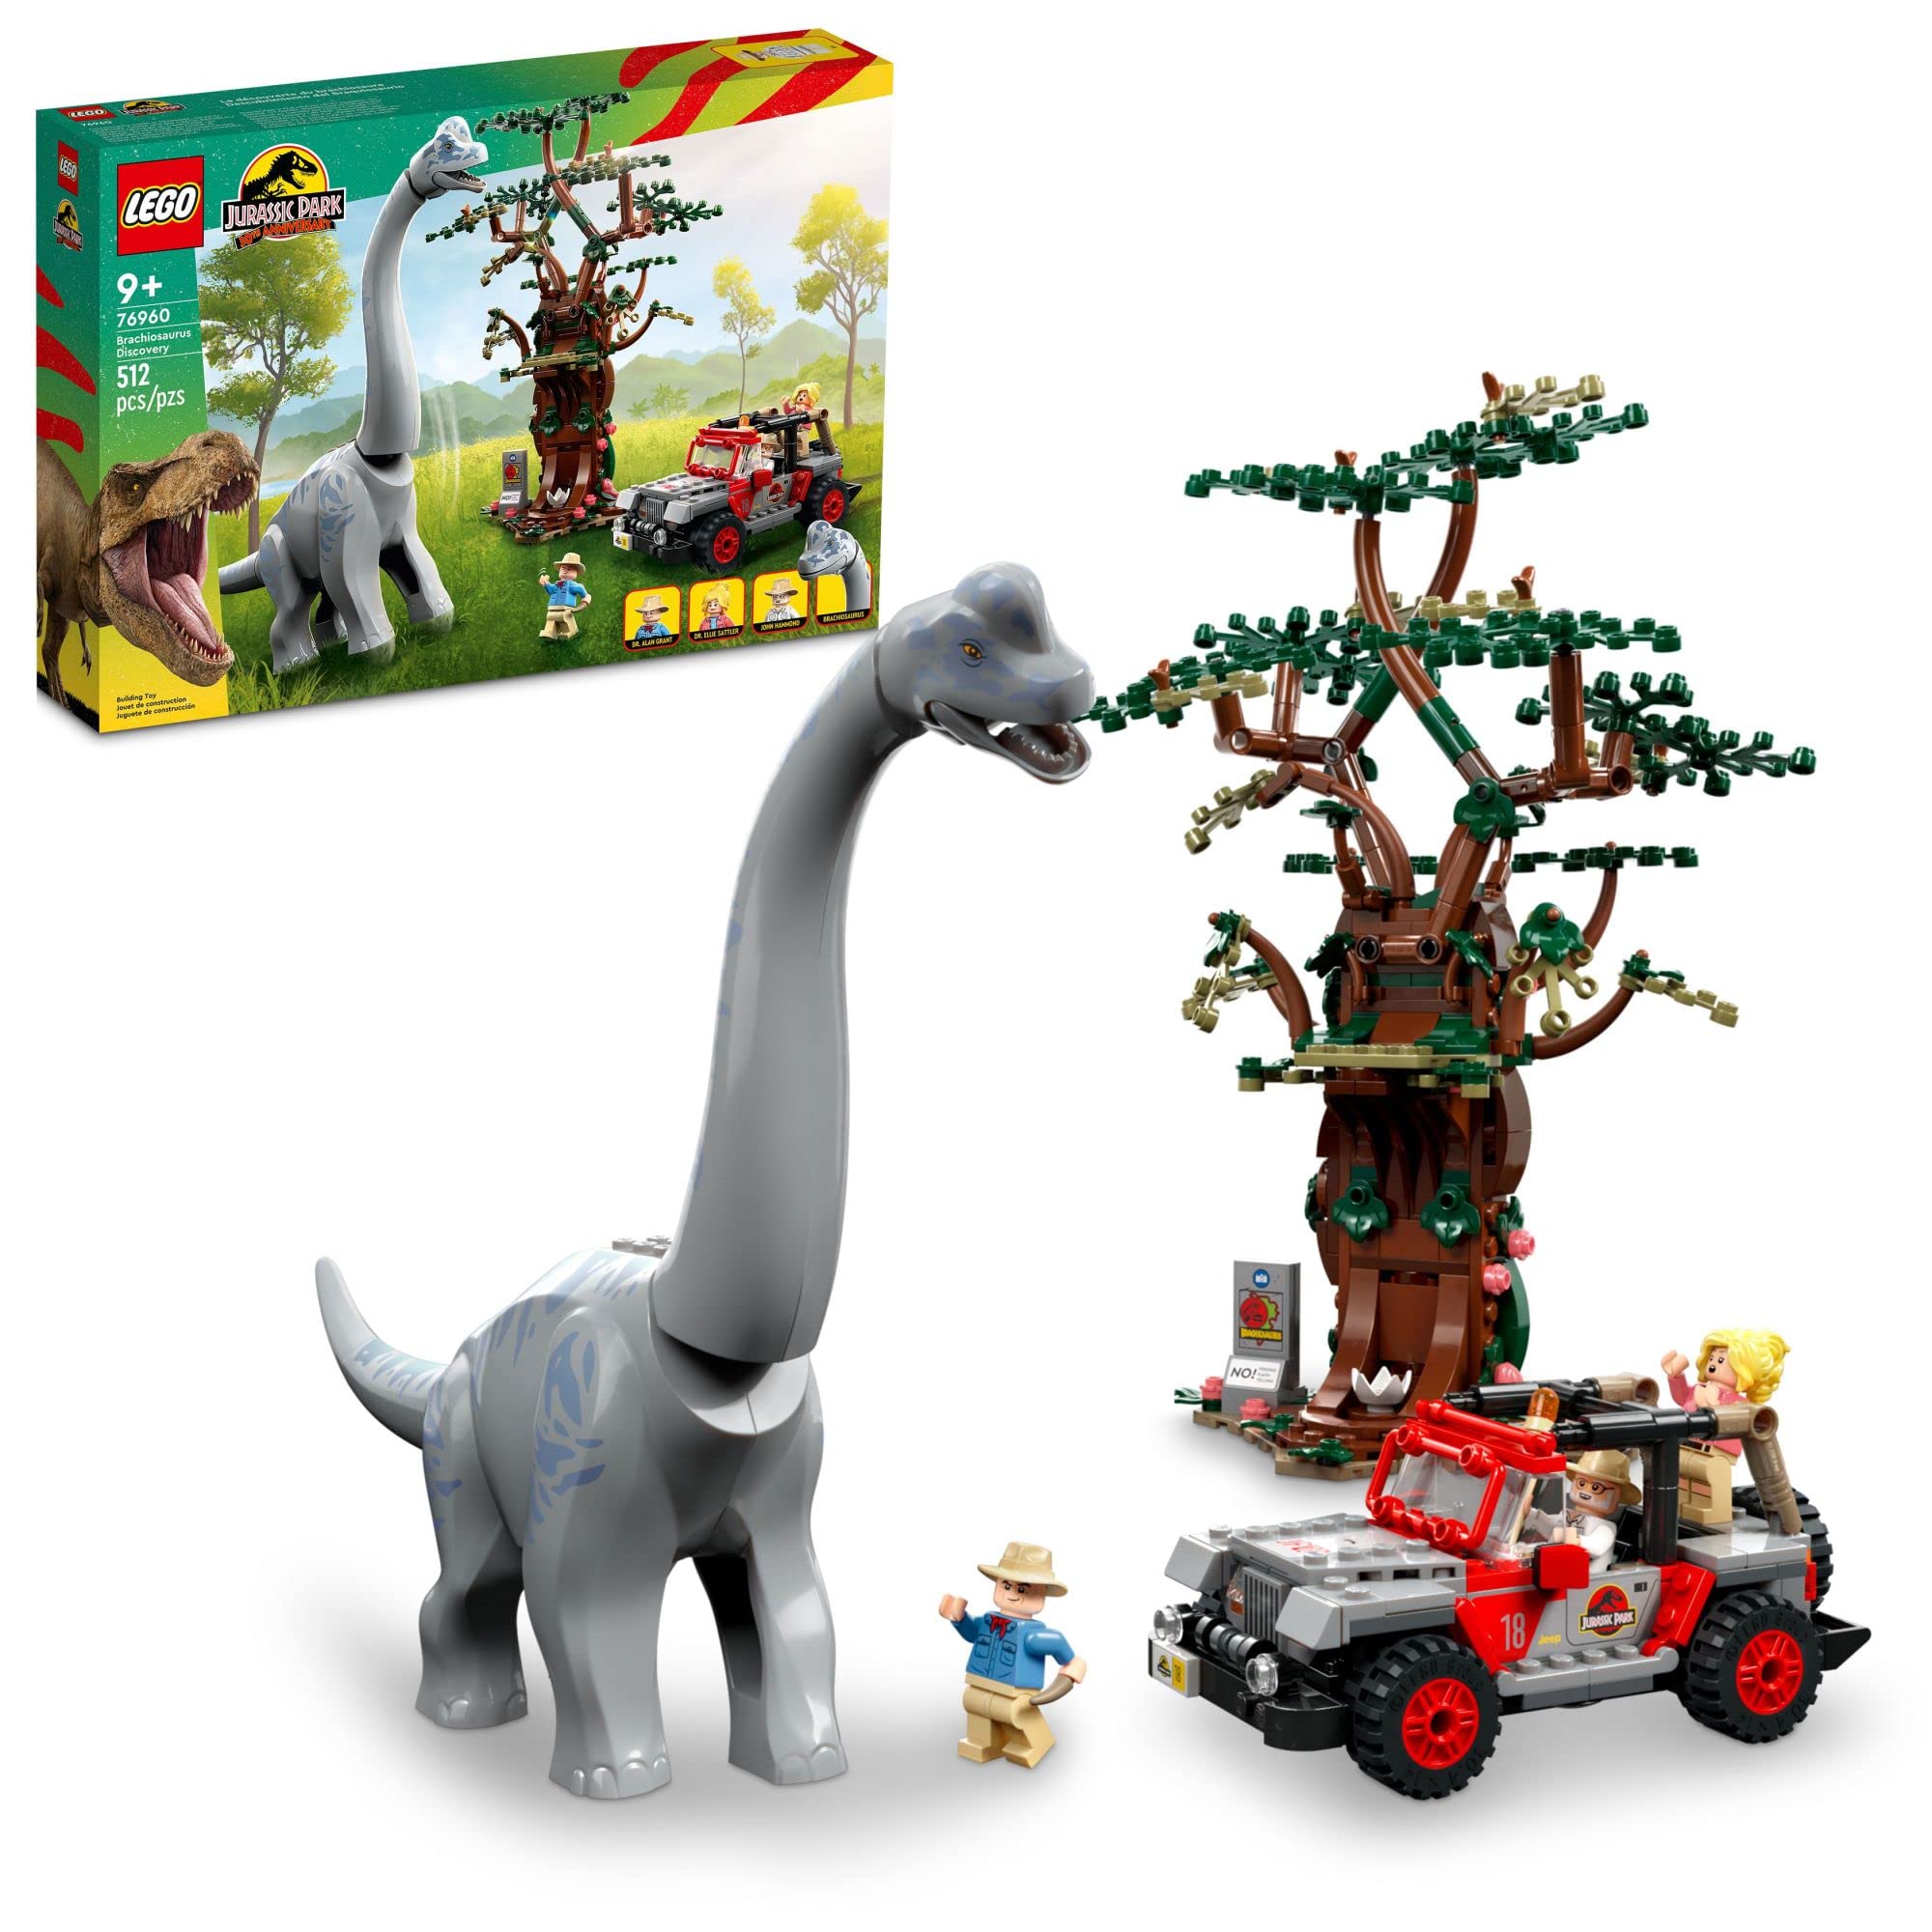  LEGO لعبة الديناصورات من Jurassic World Brachiosaurus Discovery 76960 Jurassic Park للذكرى الثلاثين؛ تتميز بشكل ديناصور كبير ولعبة سيارة...